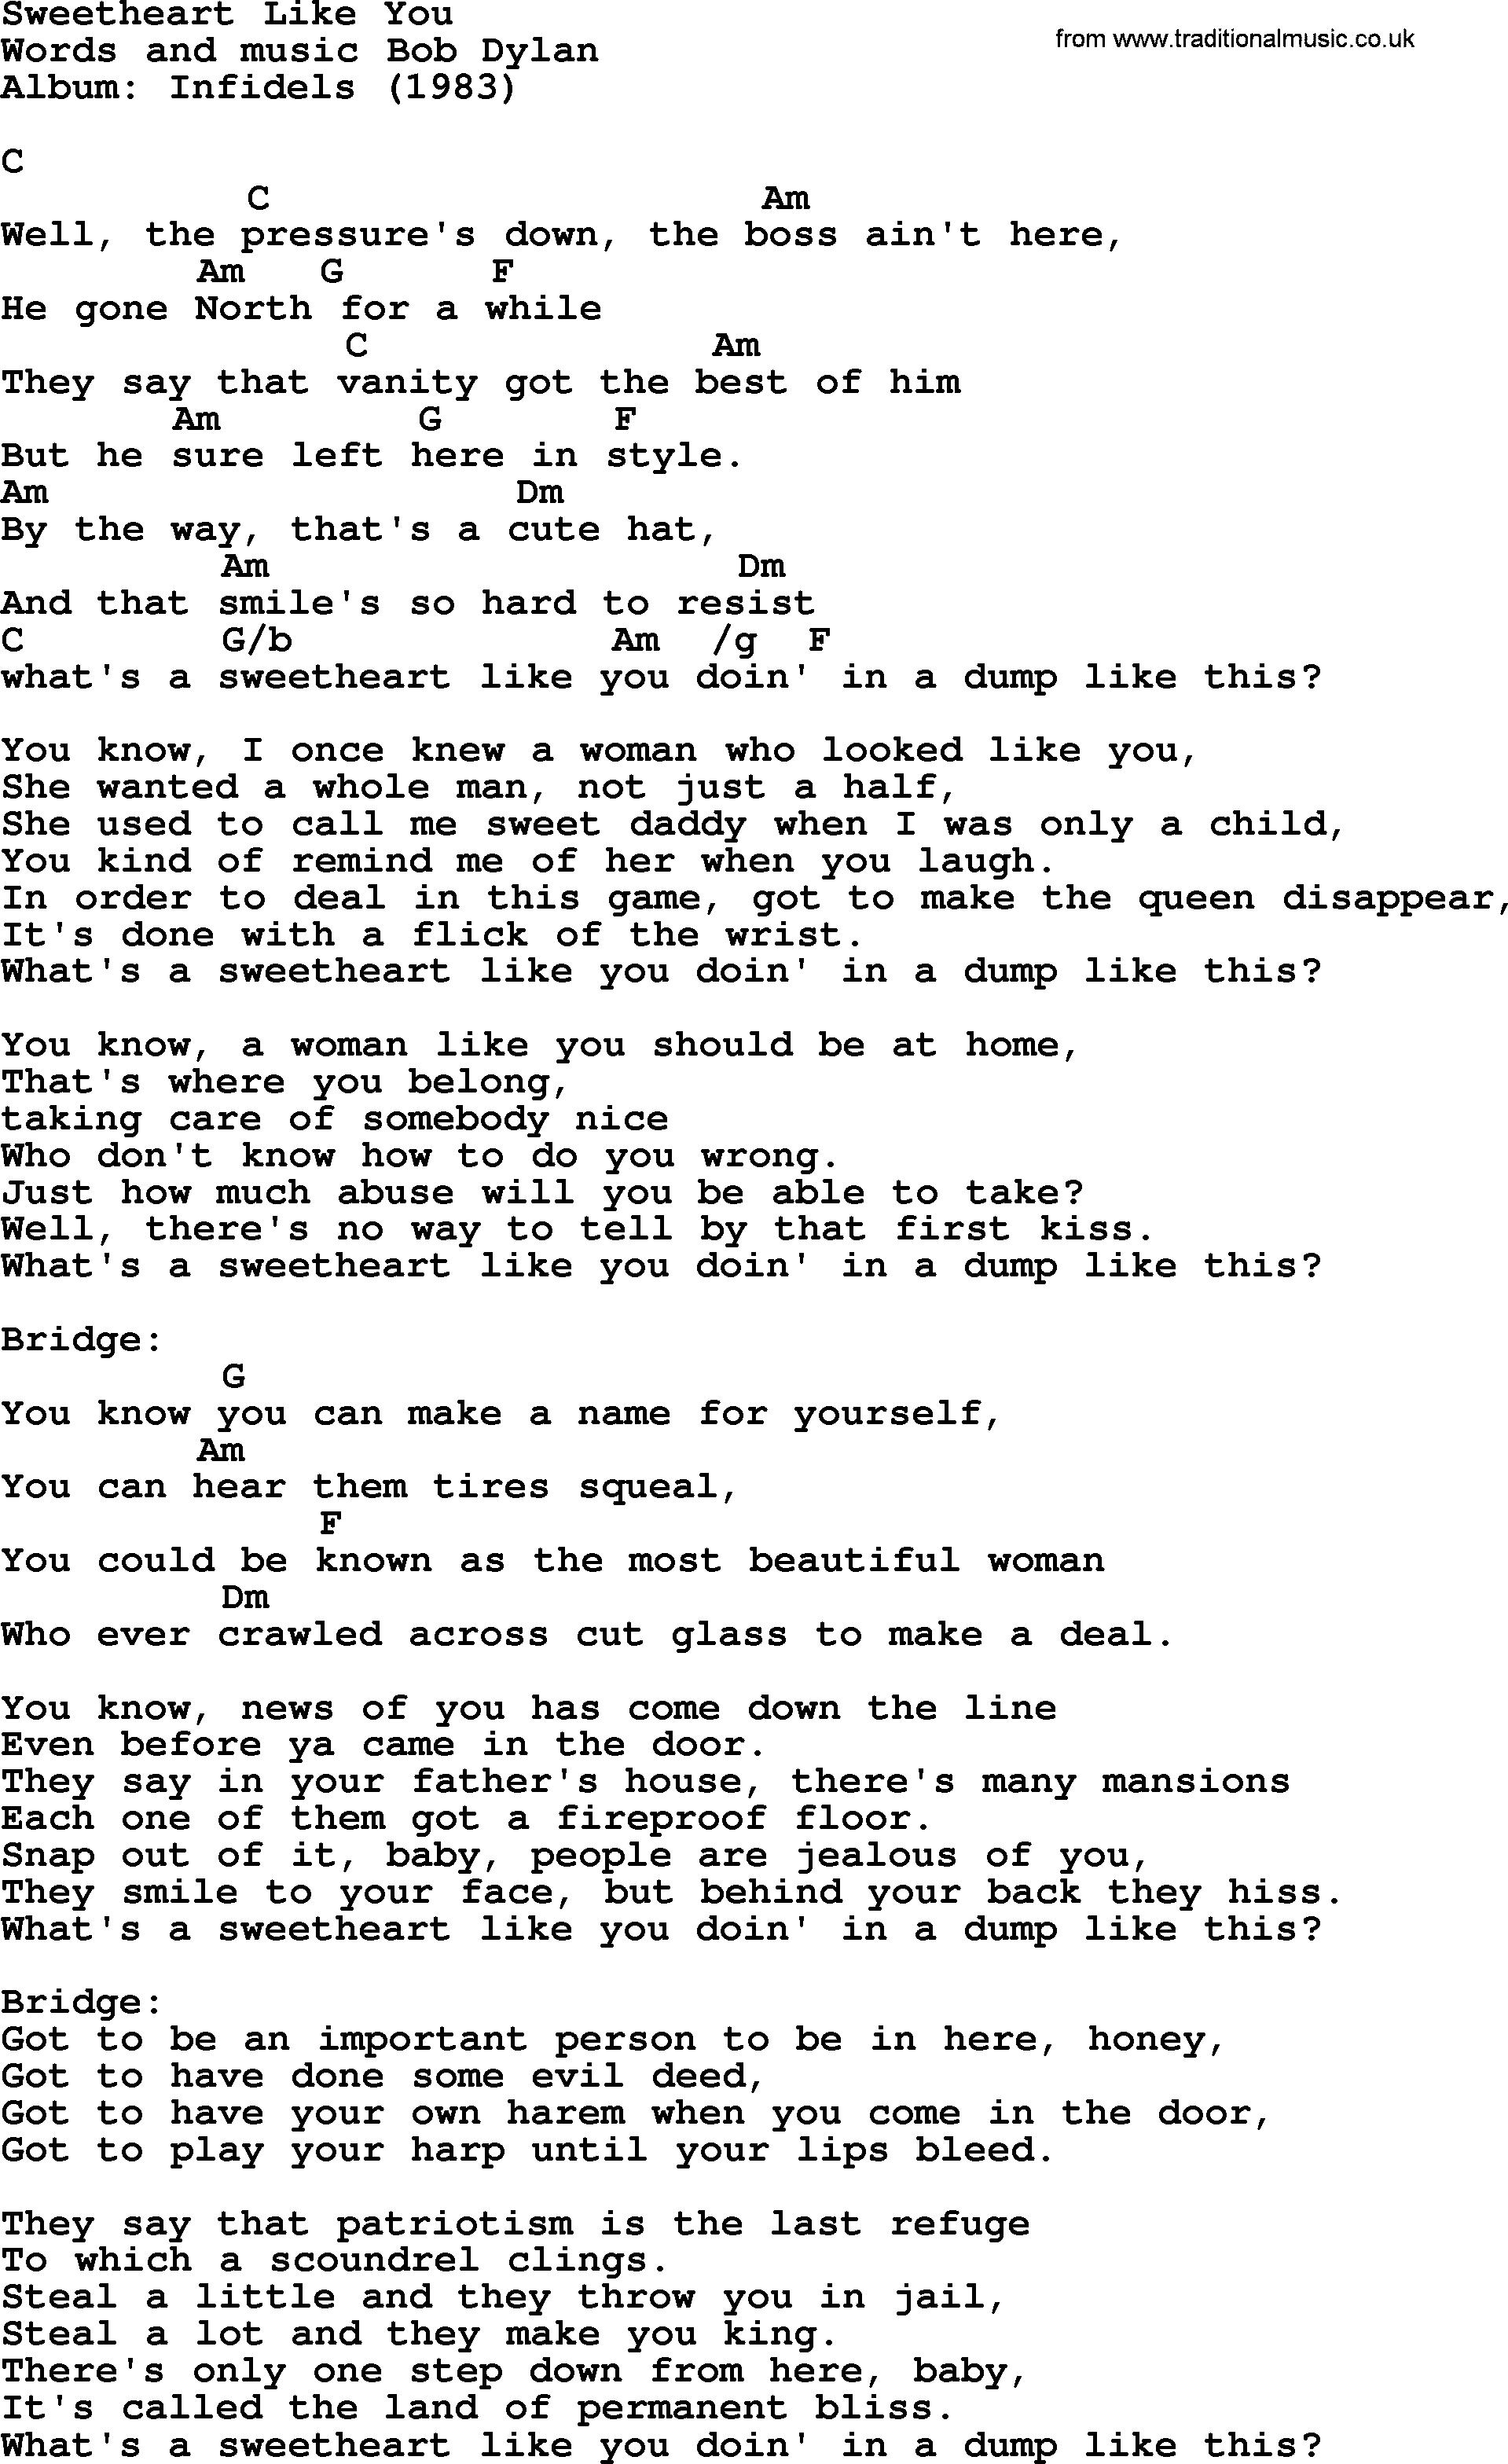 Bob Dylan song, lyrics with chords - Sweetheart Like You